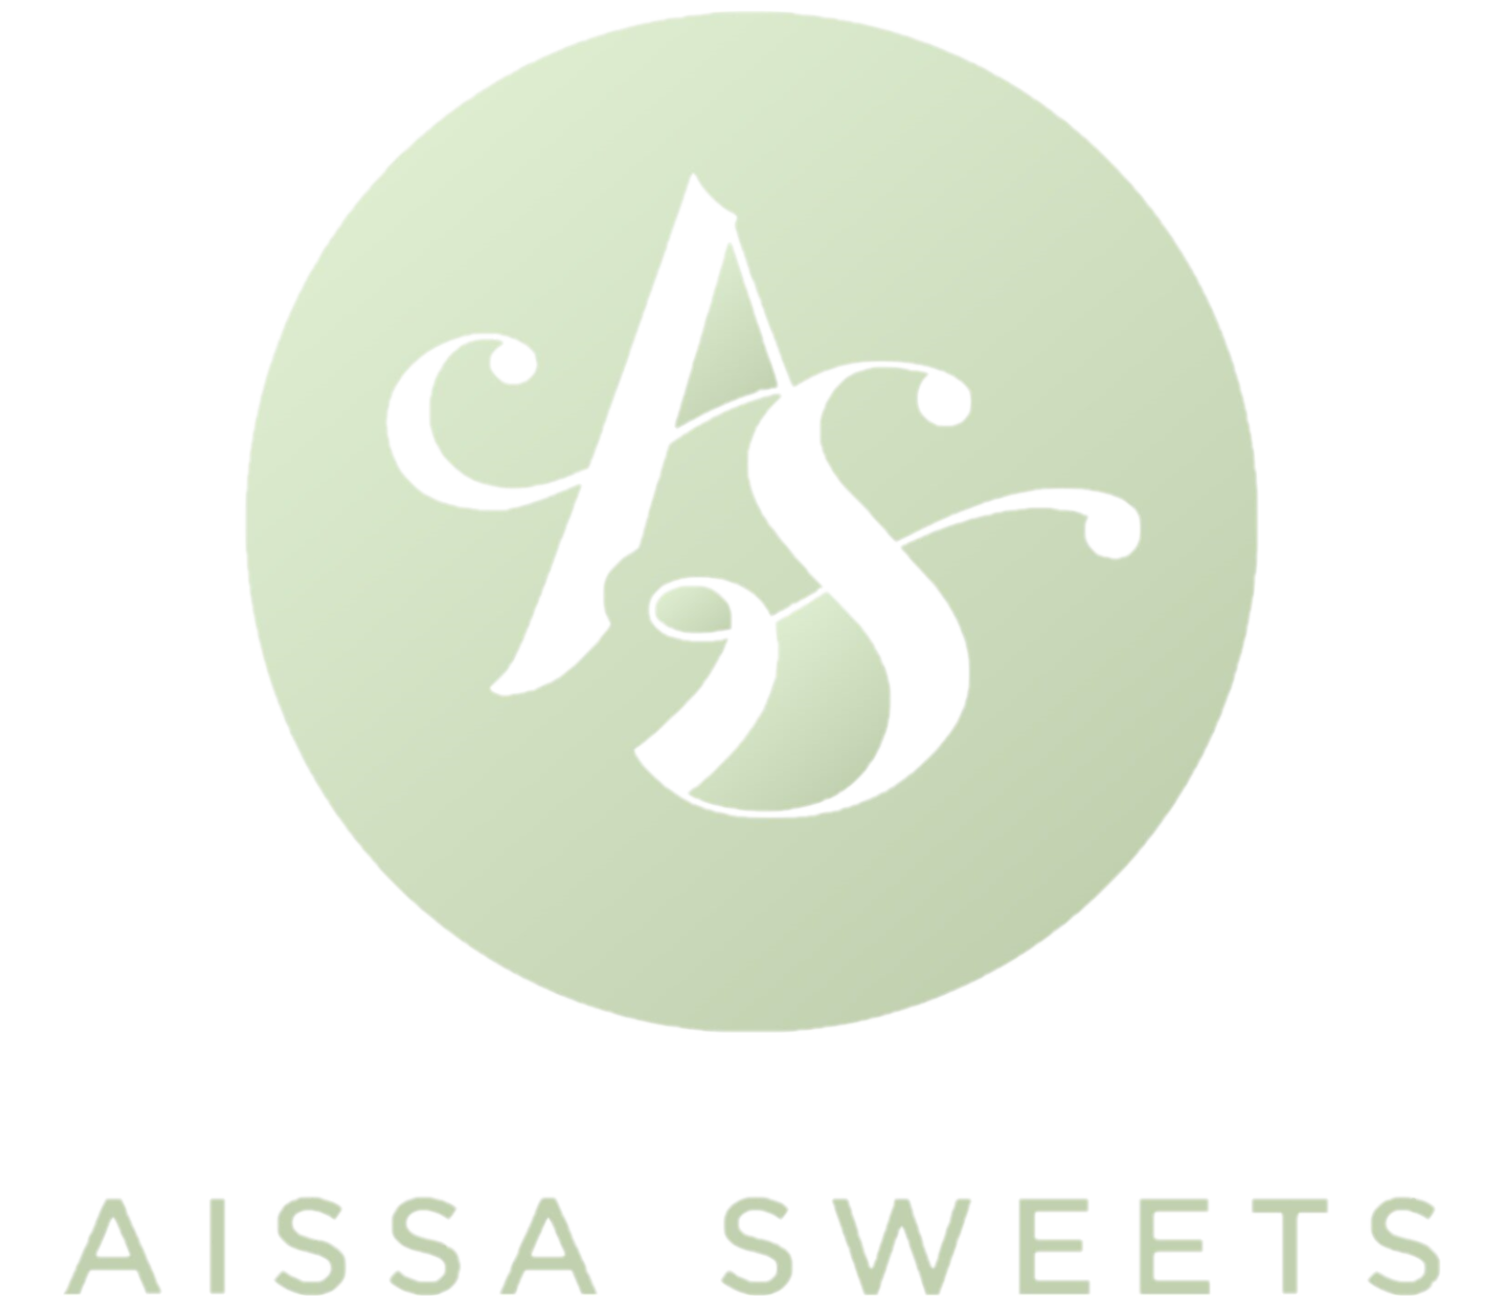 Aissa Sweets